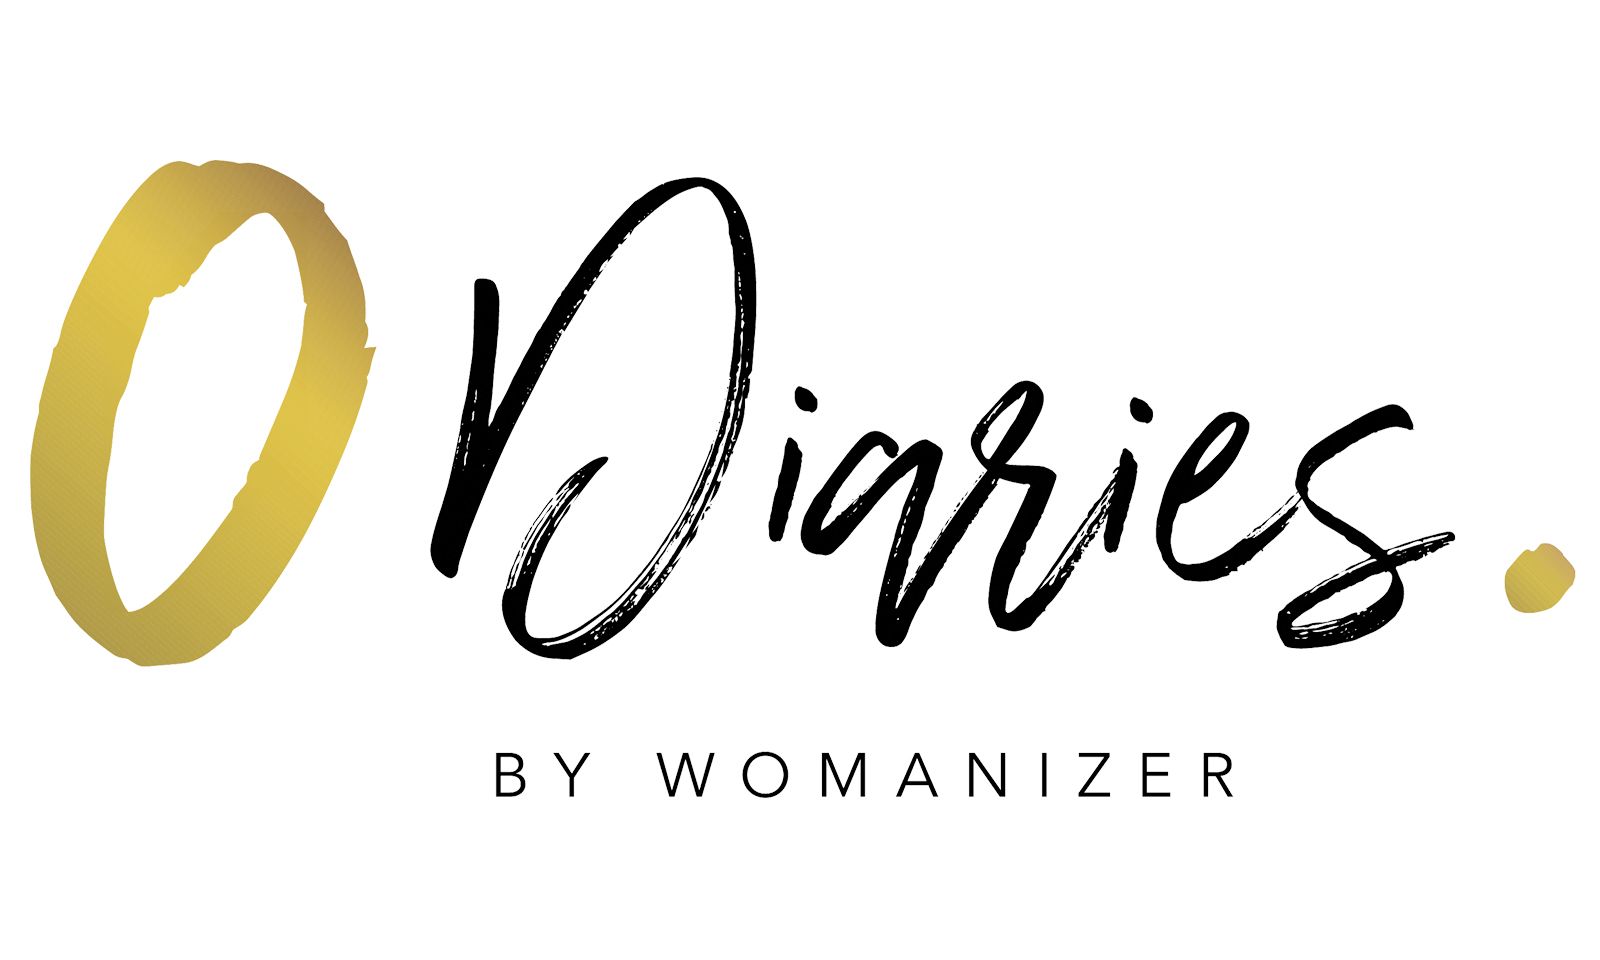 Womanizer Launches ‘O Diaries’ Magazine